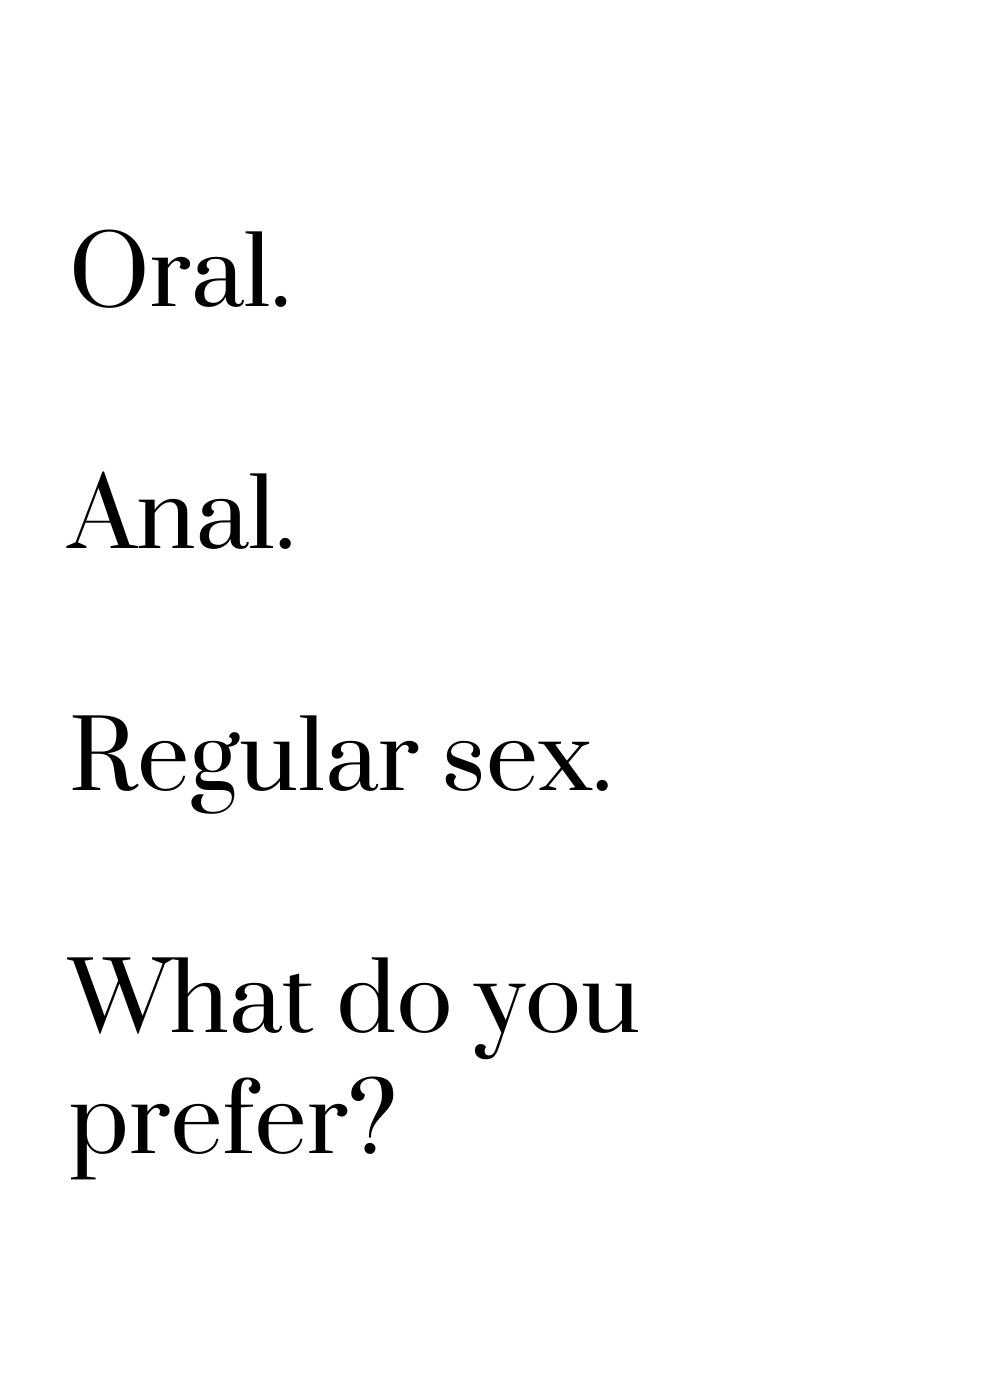 oral anal regular sex what do you prefer